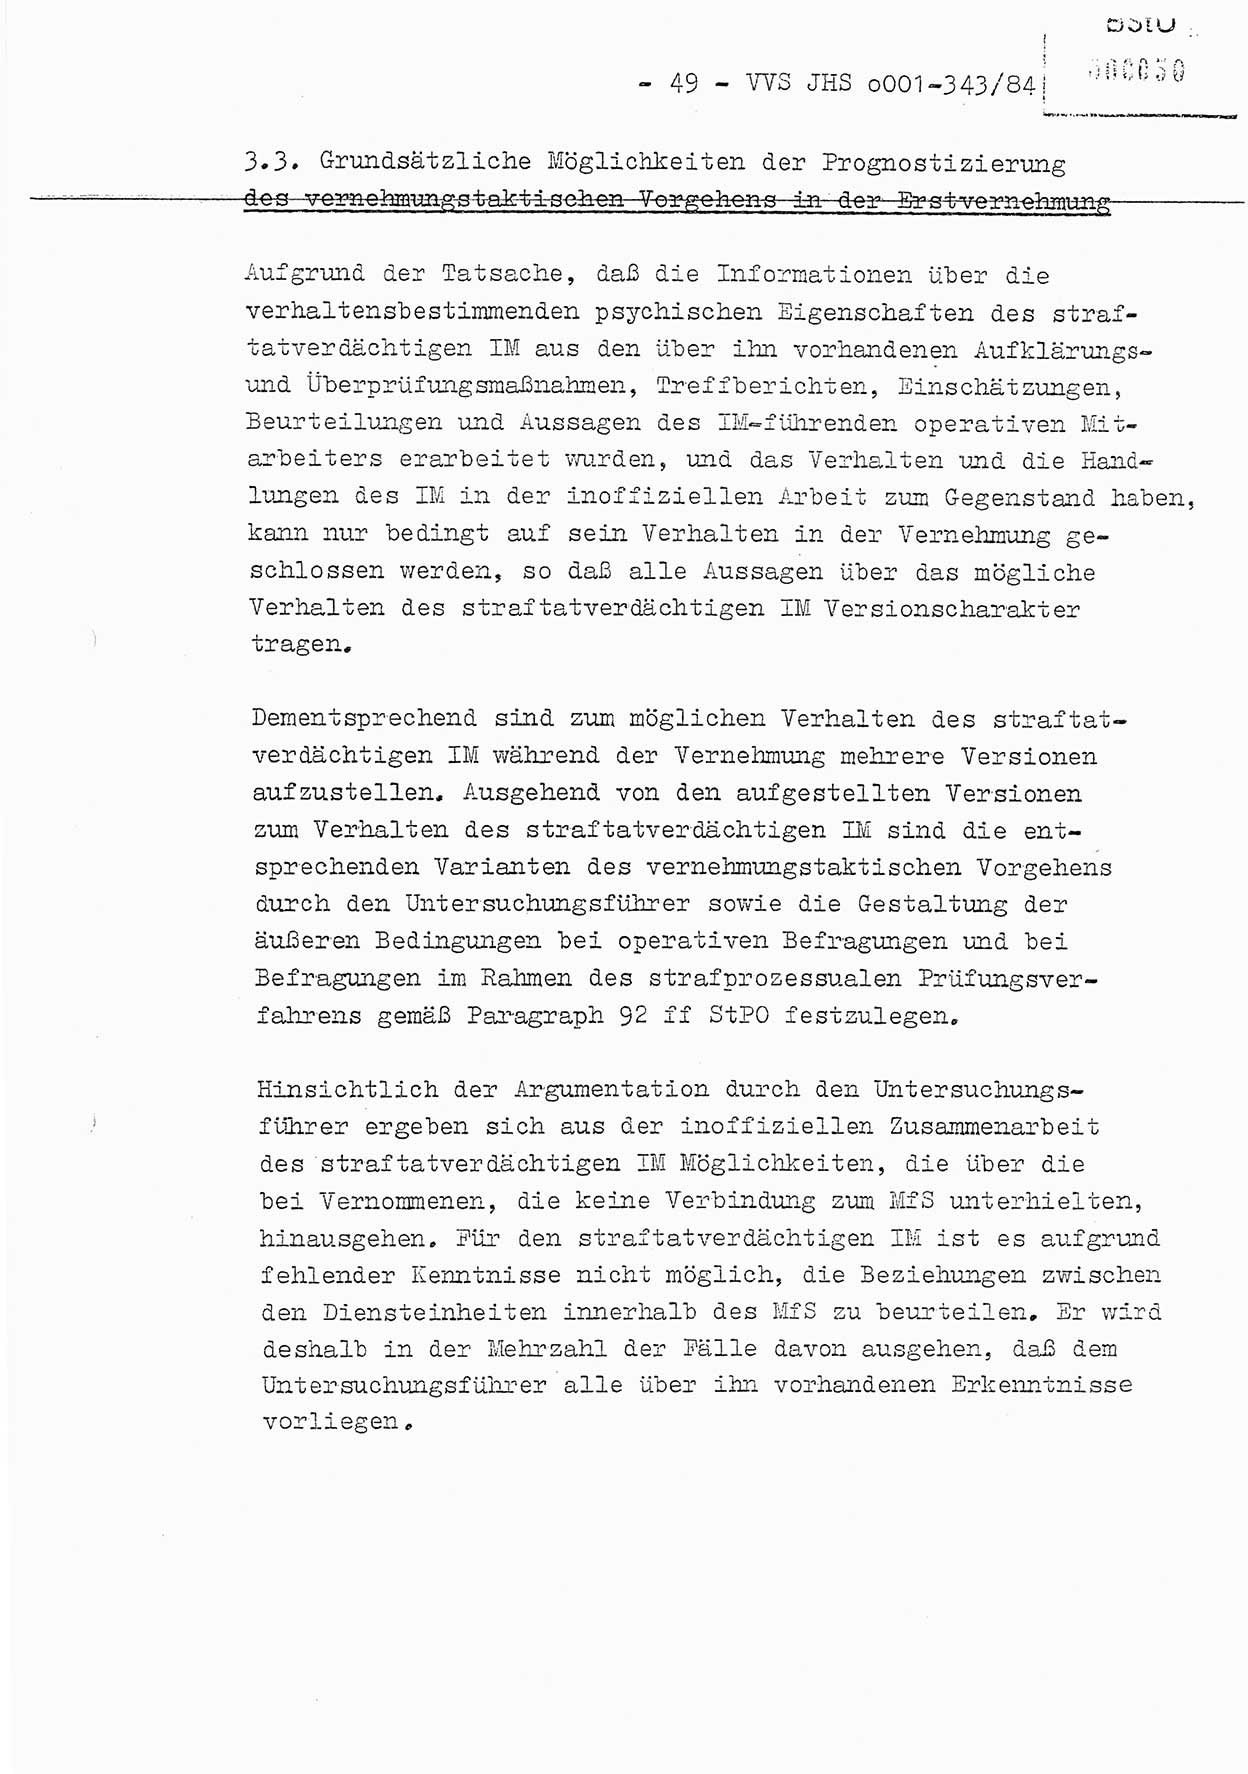 Diplomarbeit, Oberleutnant Bernd Michael (HA Ⅸ/5), Oberleutnant Peter Felber (HA IX/5), Ministerium für Staatssicherheit (MfS) [Deutsche Demokratische Republik (DDR)], Juristische Hochschule (JHS), Vertrauliche Verschlußsache (VVS) o001-343/84, Potsdam 1985, Seite 49 (Dipl.-Arb. MfS DDR JHS VVS o001-343/84 1985, S. 49)